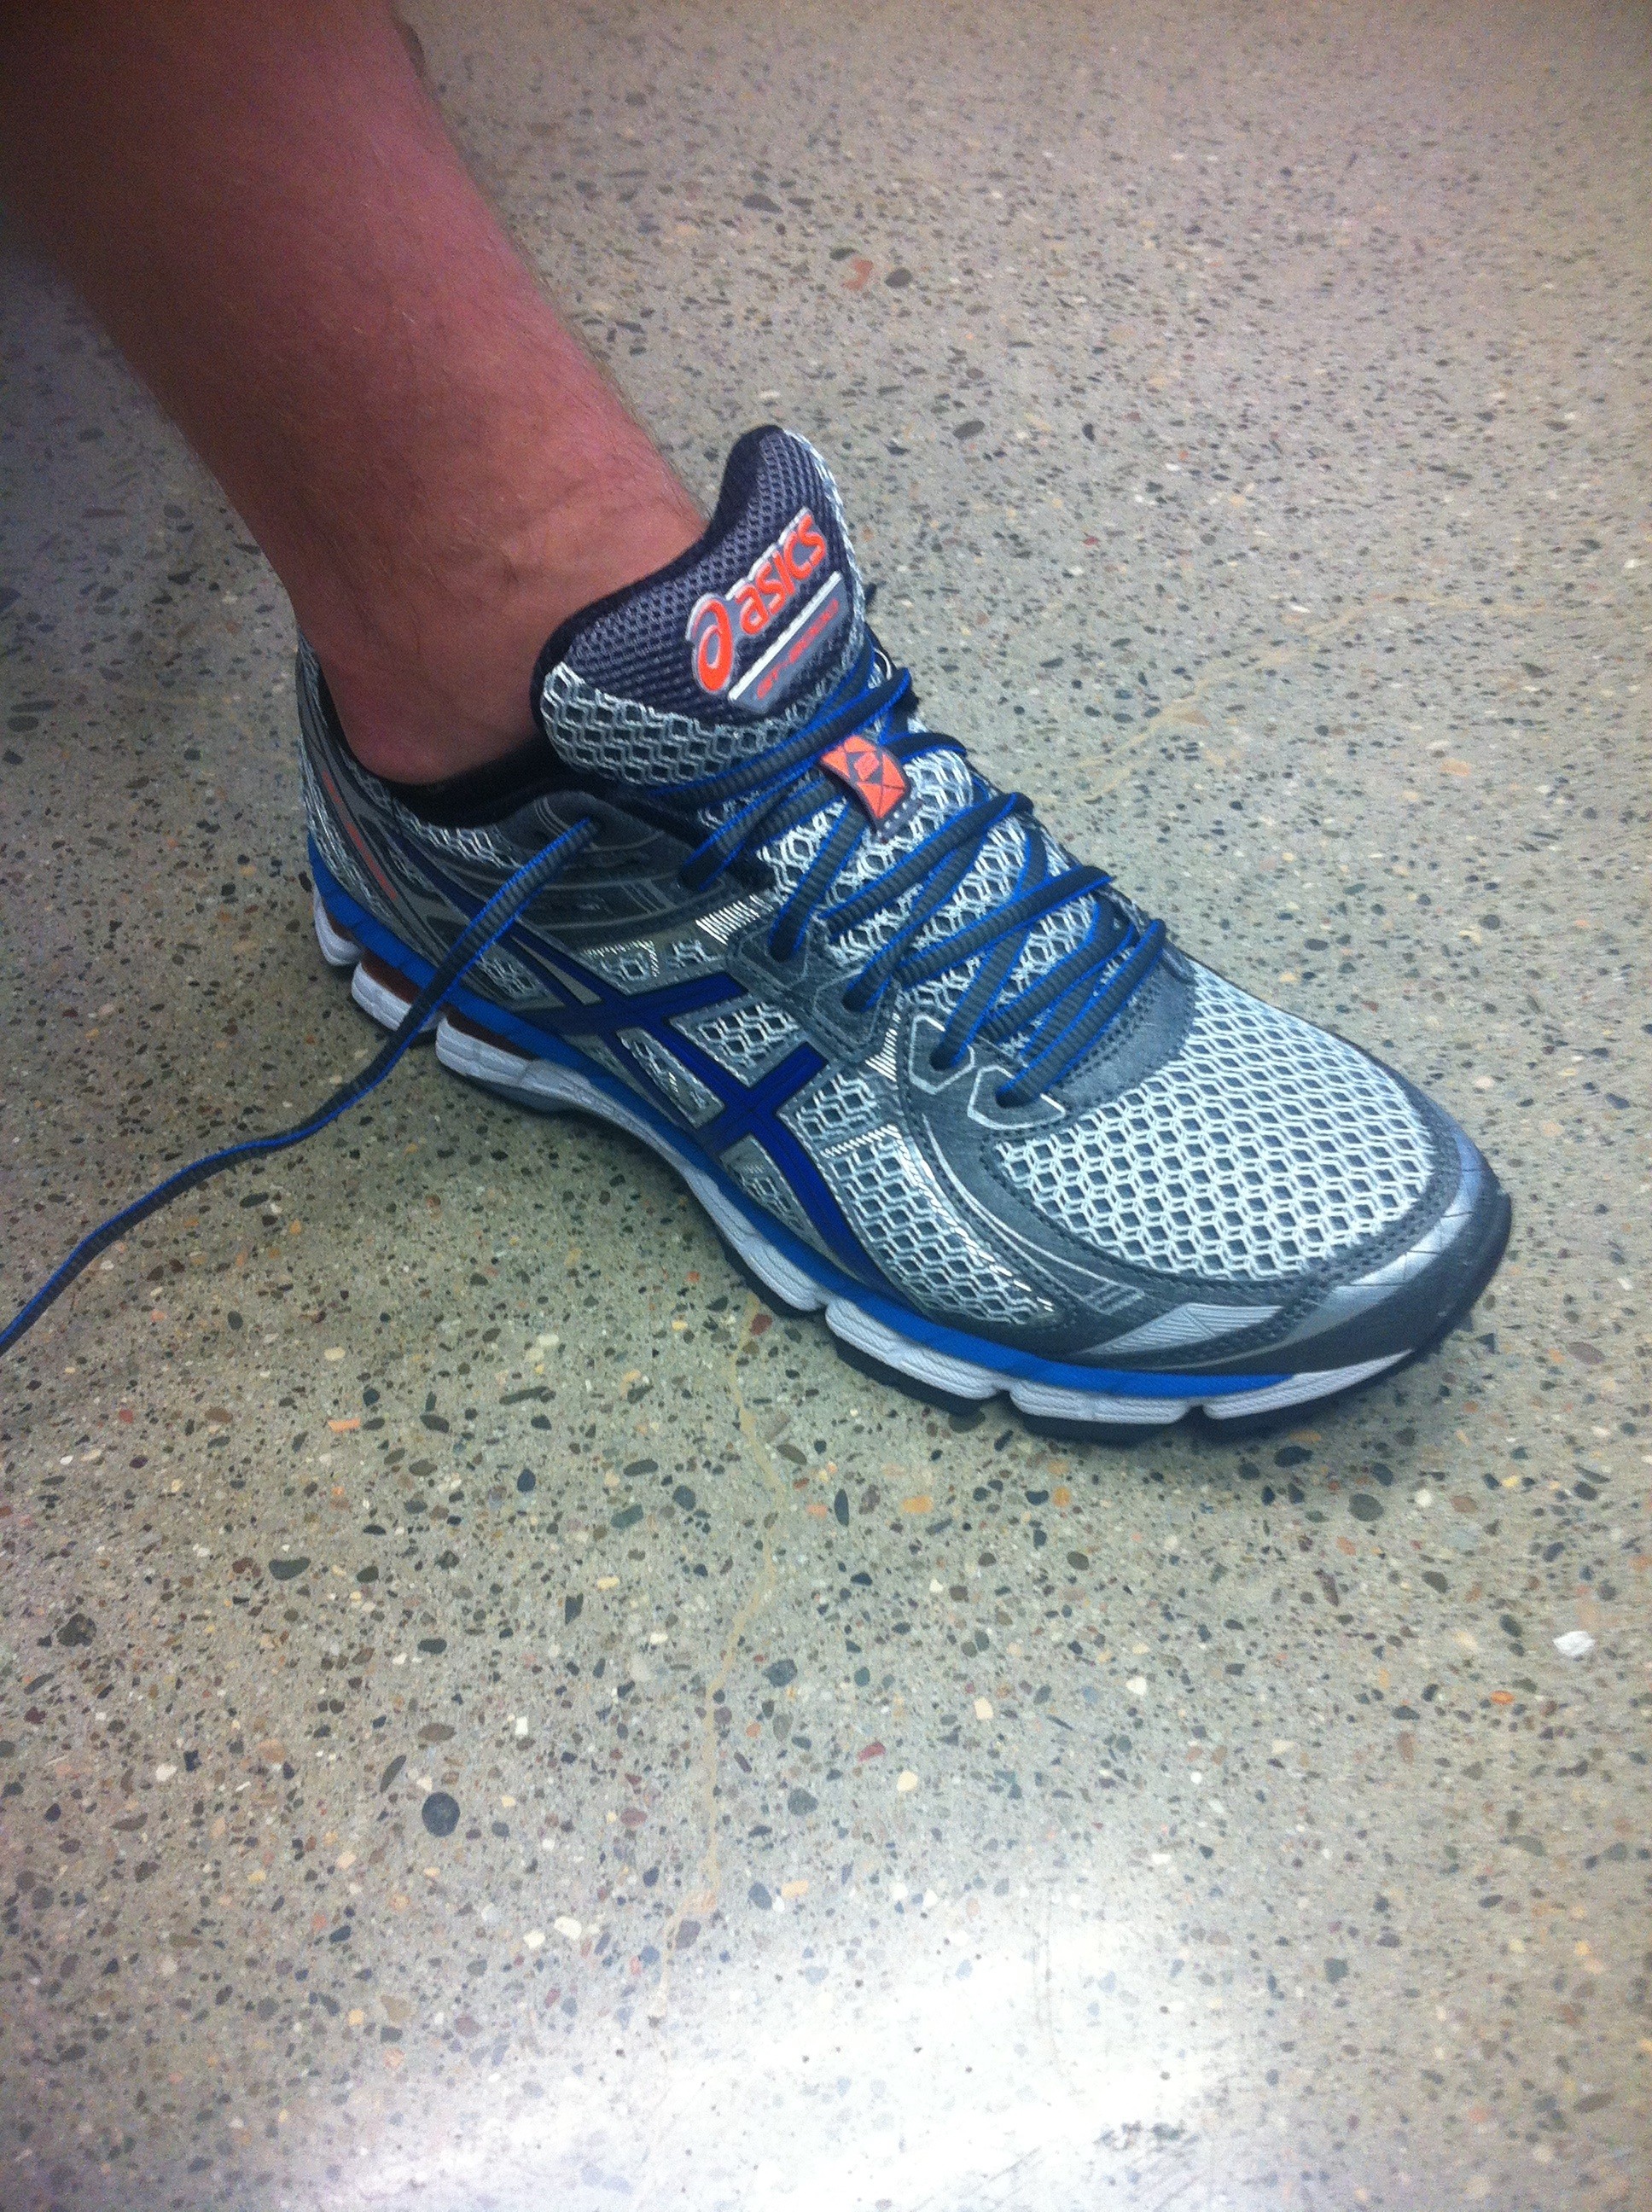 heel slippage new running shoes